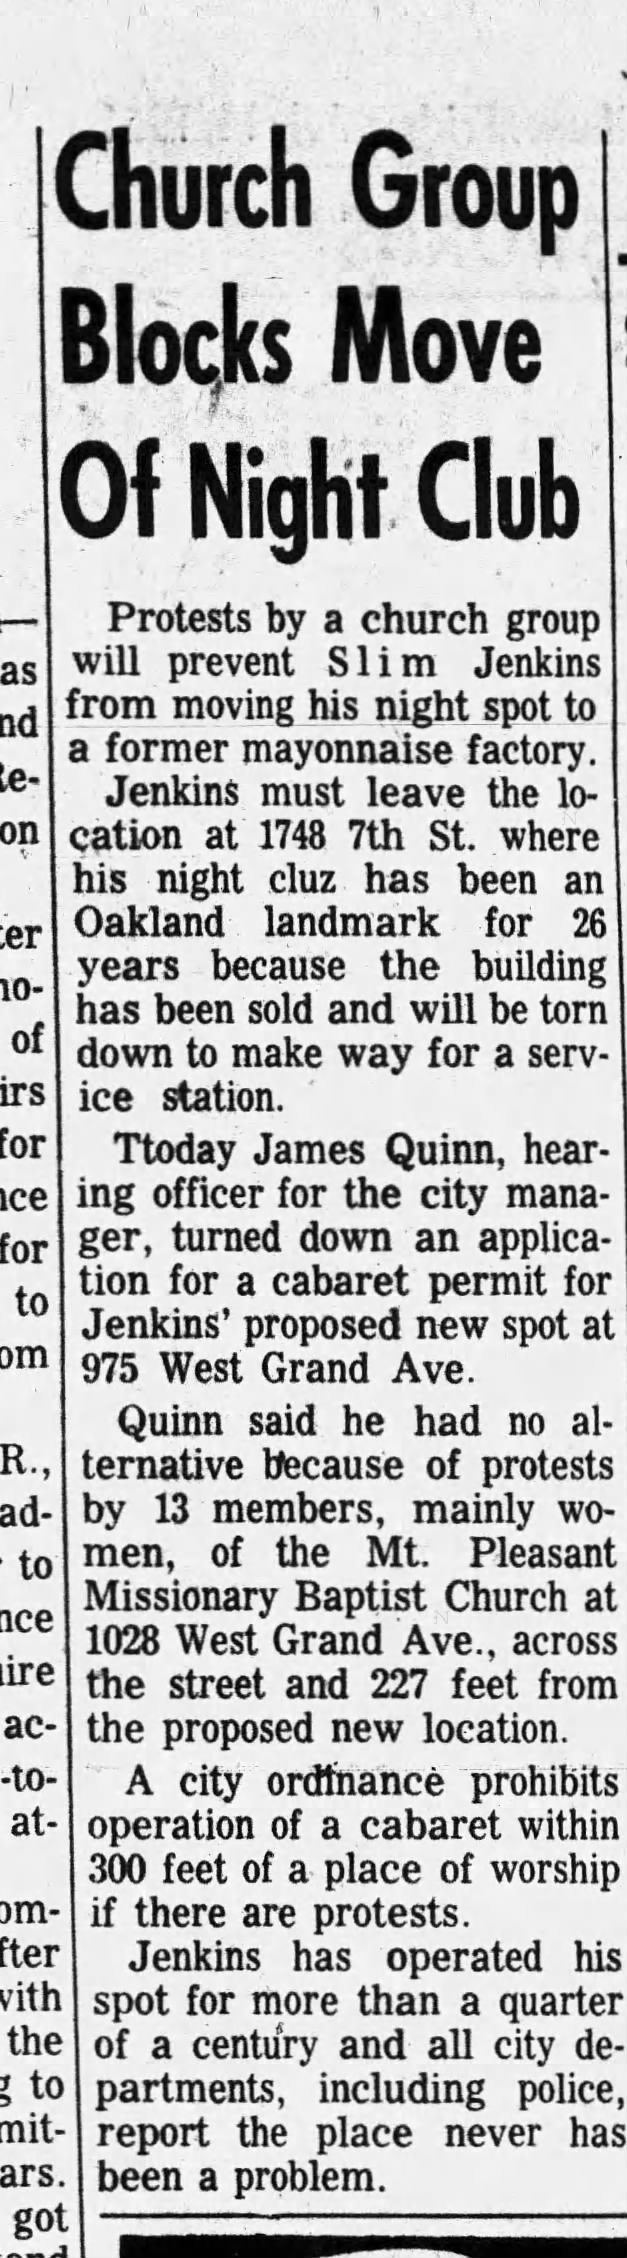 Church Group Blocks Move Of Night Club- Slim Jenkins Jul 14 1961